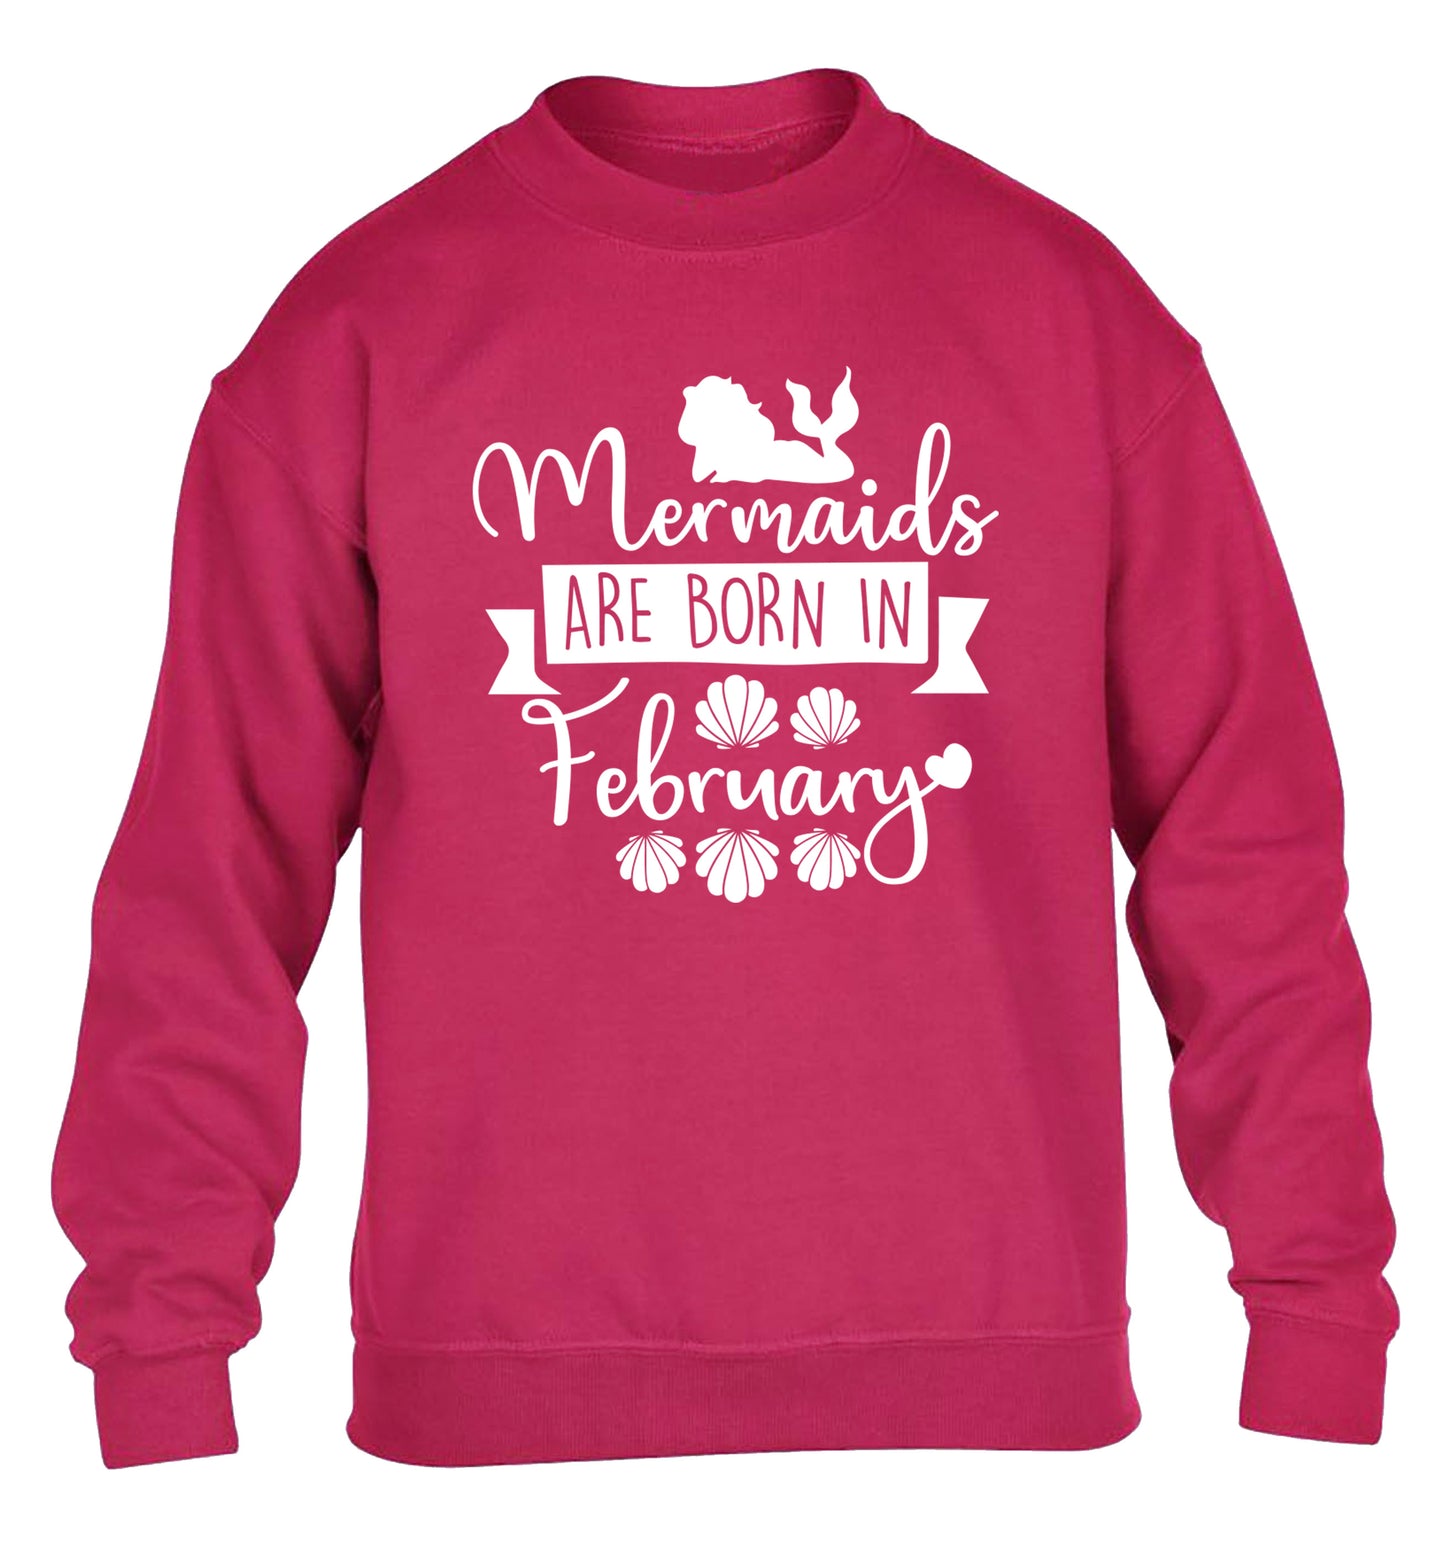 Mermaids are born in February children's pink sweater 12-13 Years